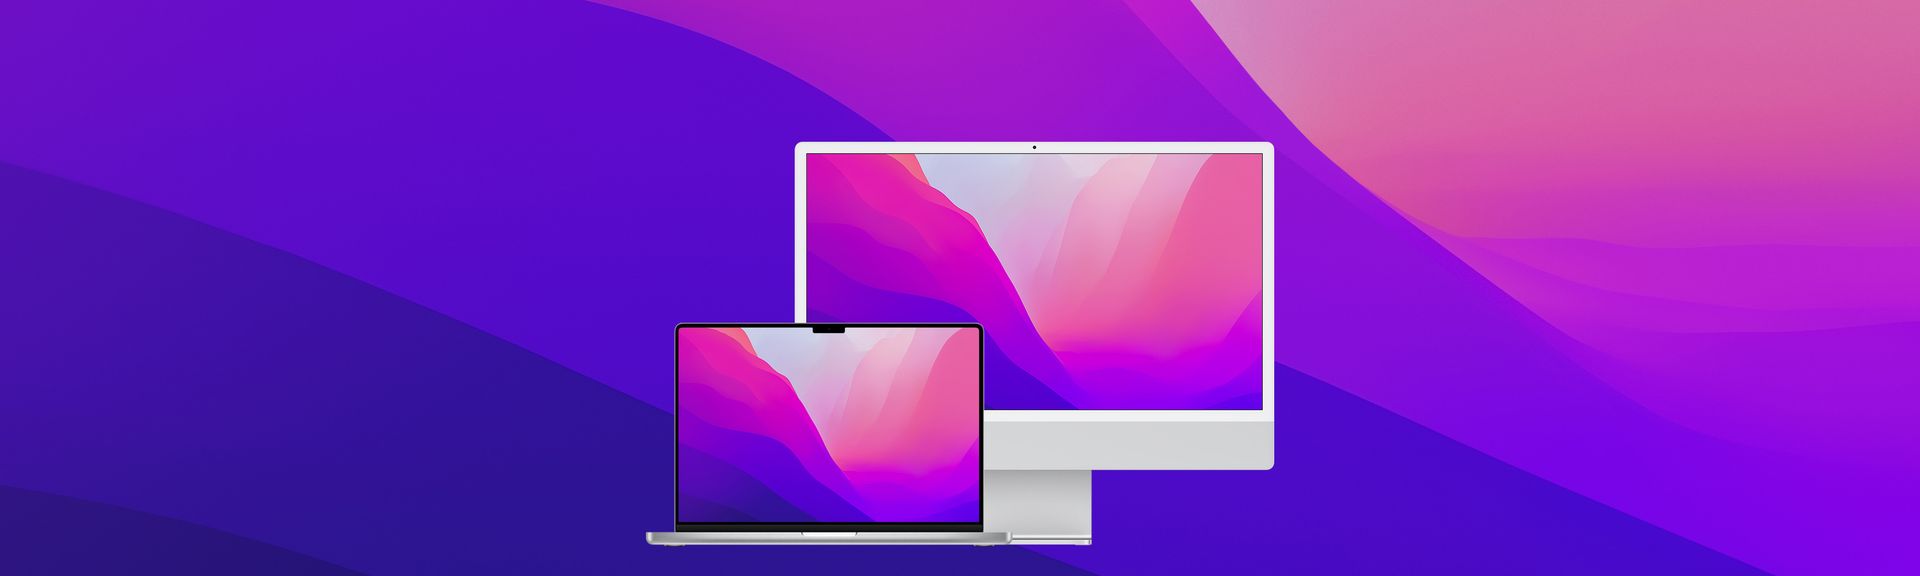 Karşılaştırma: Windows vs macOS